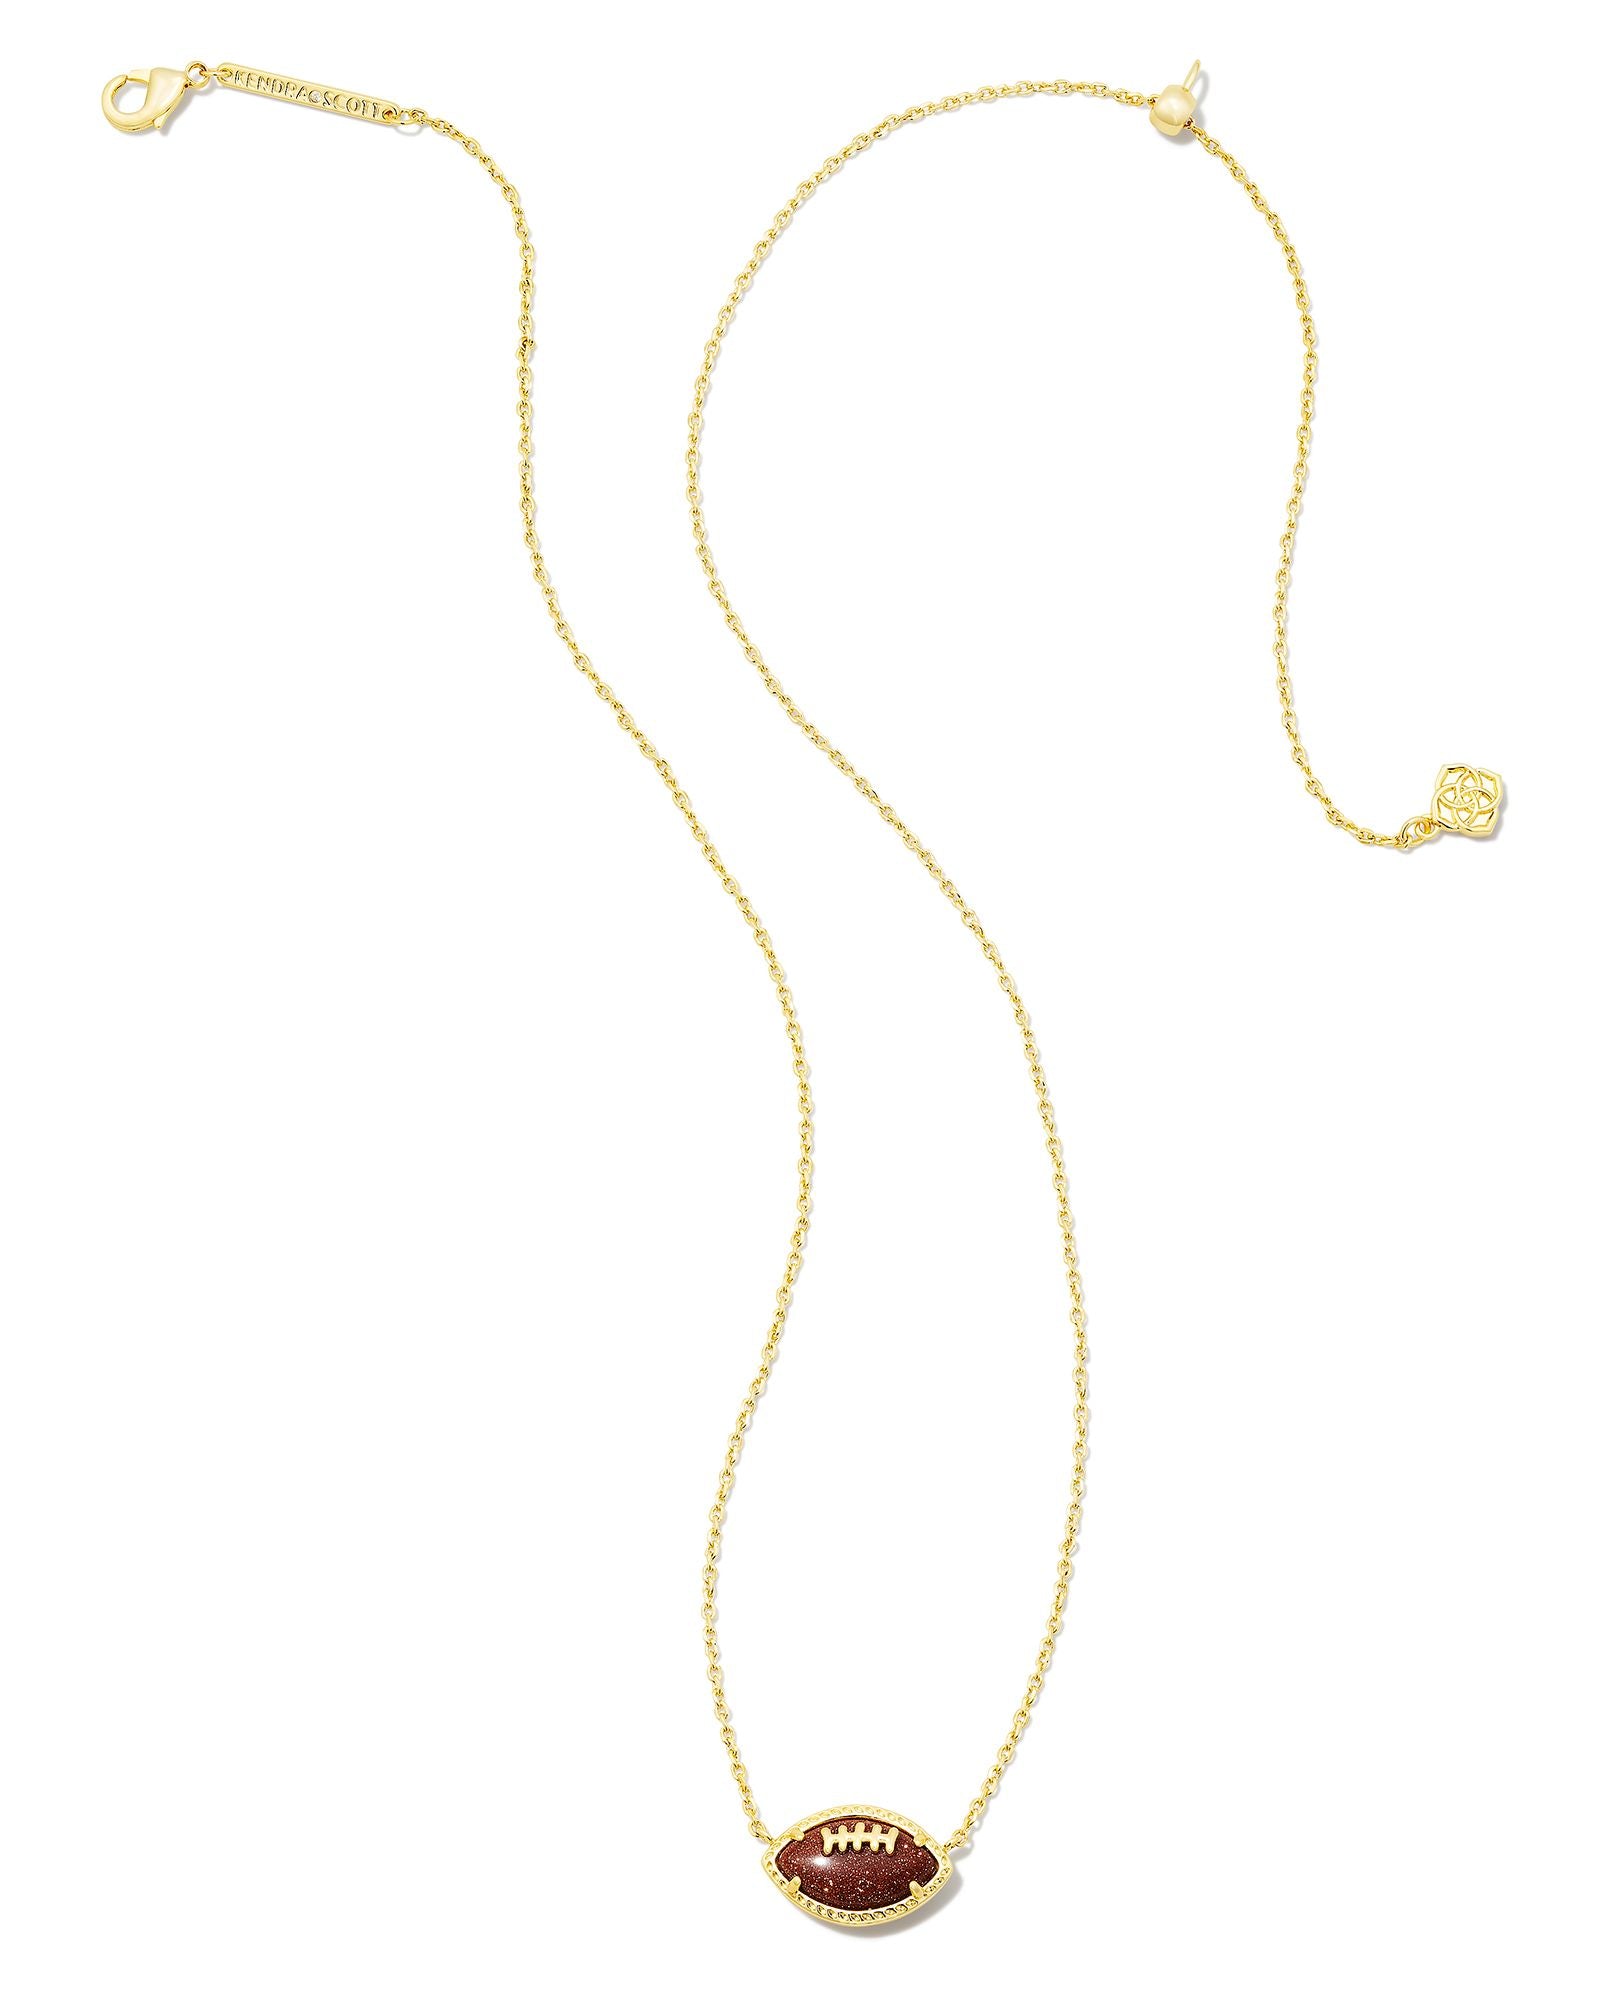 Kendra Scott | Football Gold Short Pendant Necklace in Orange Goldstone - Giddy Up Glamour Boutique